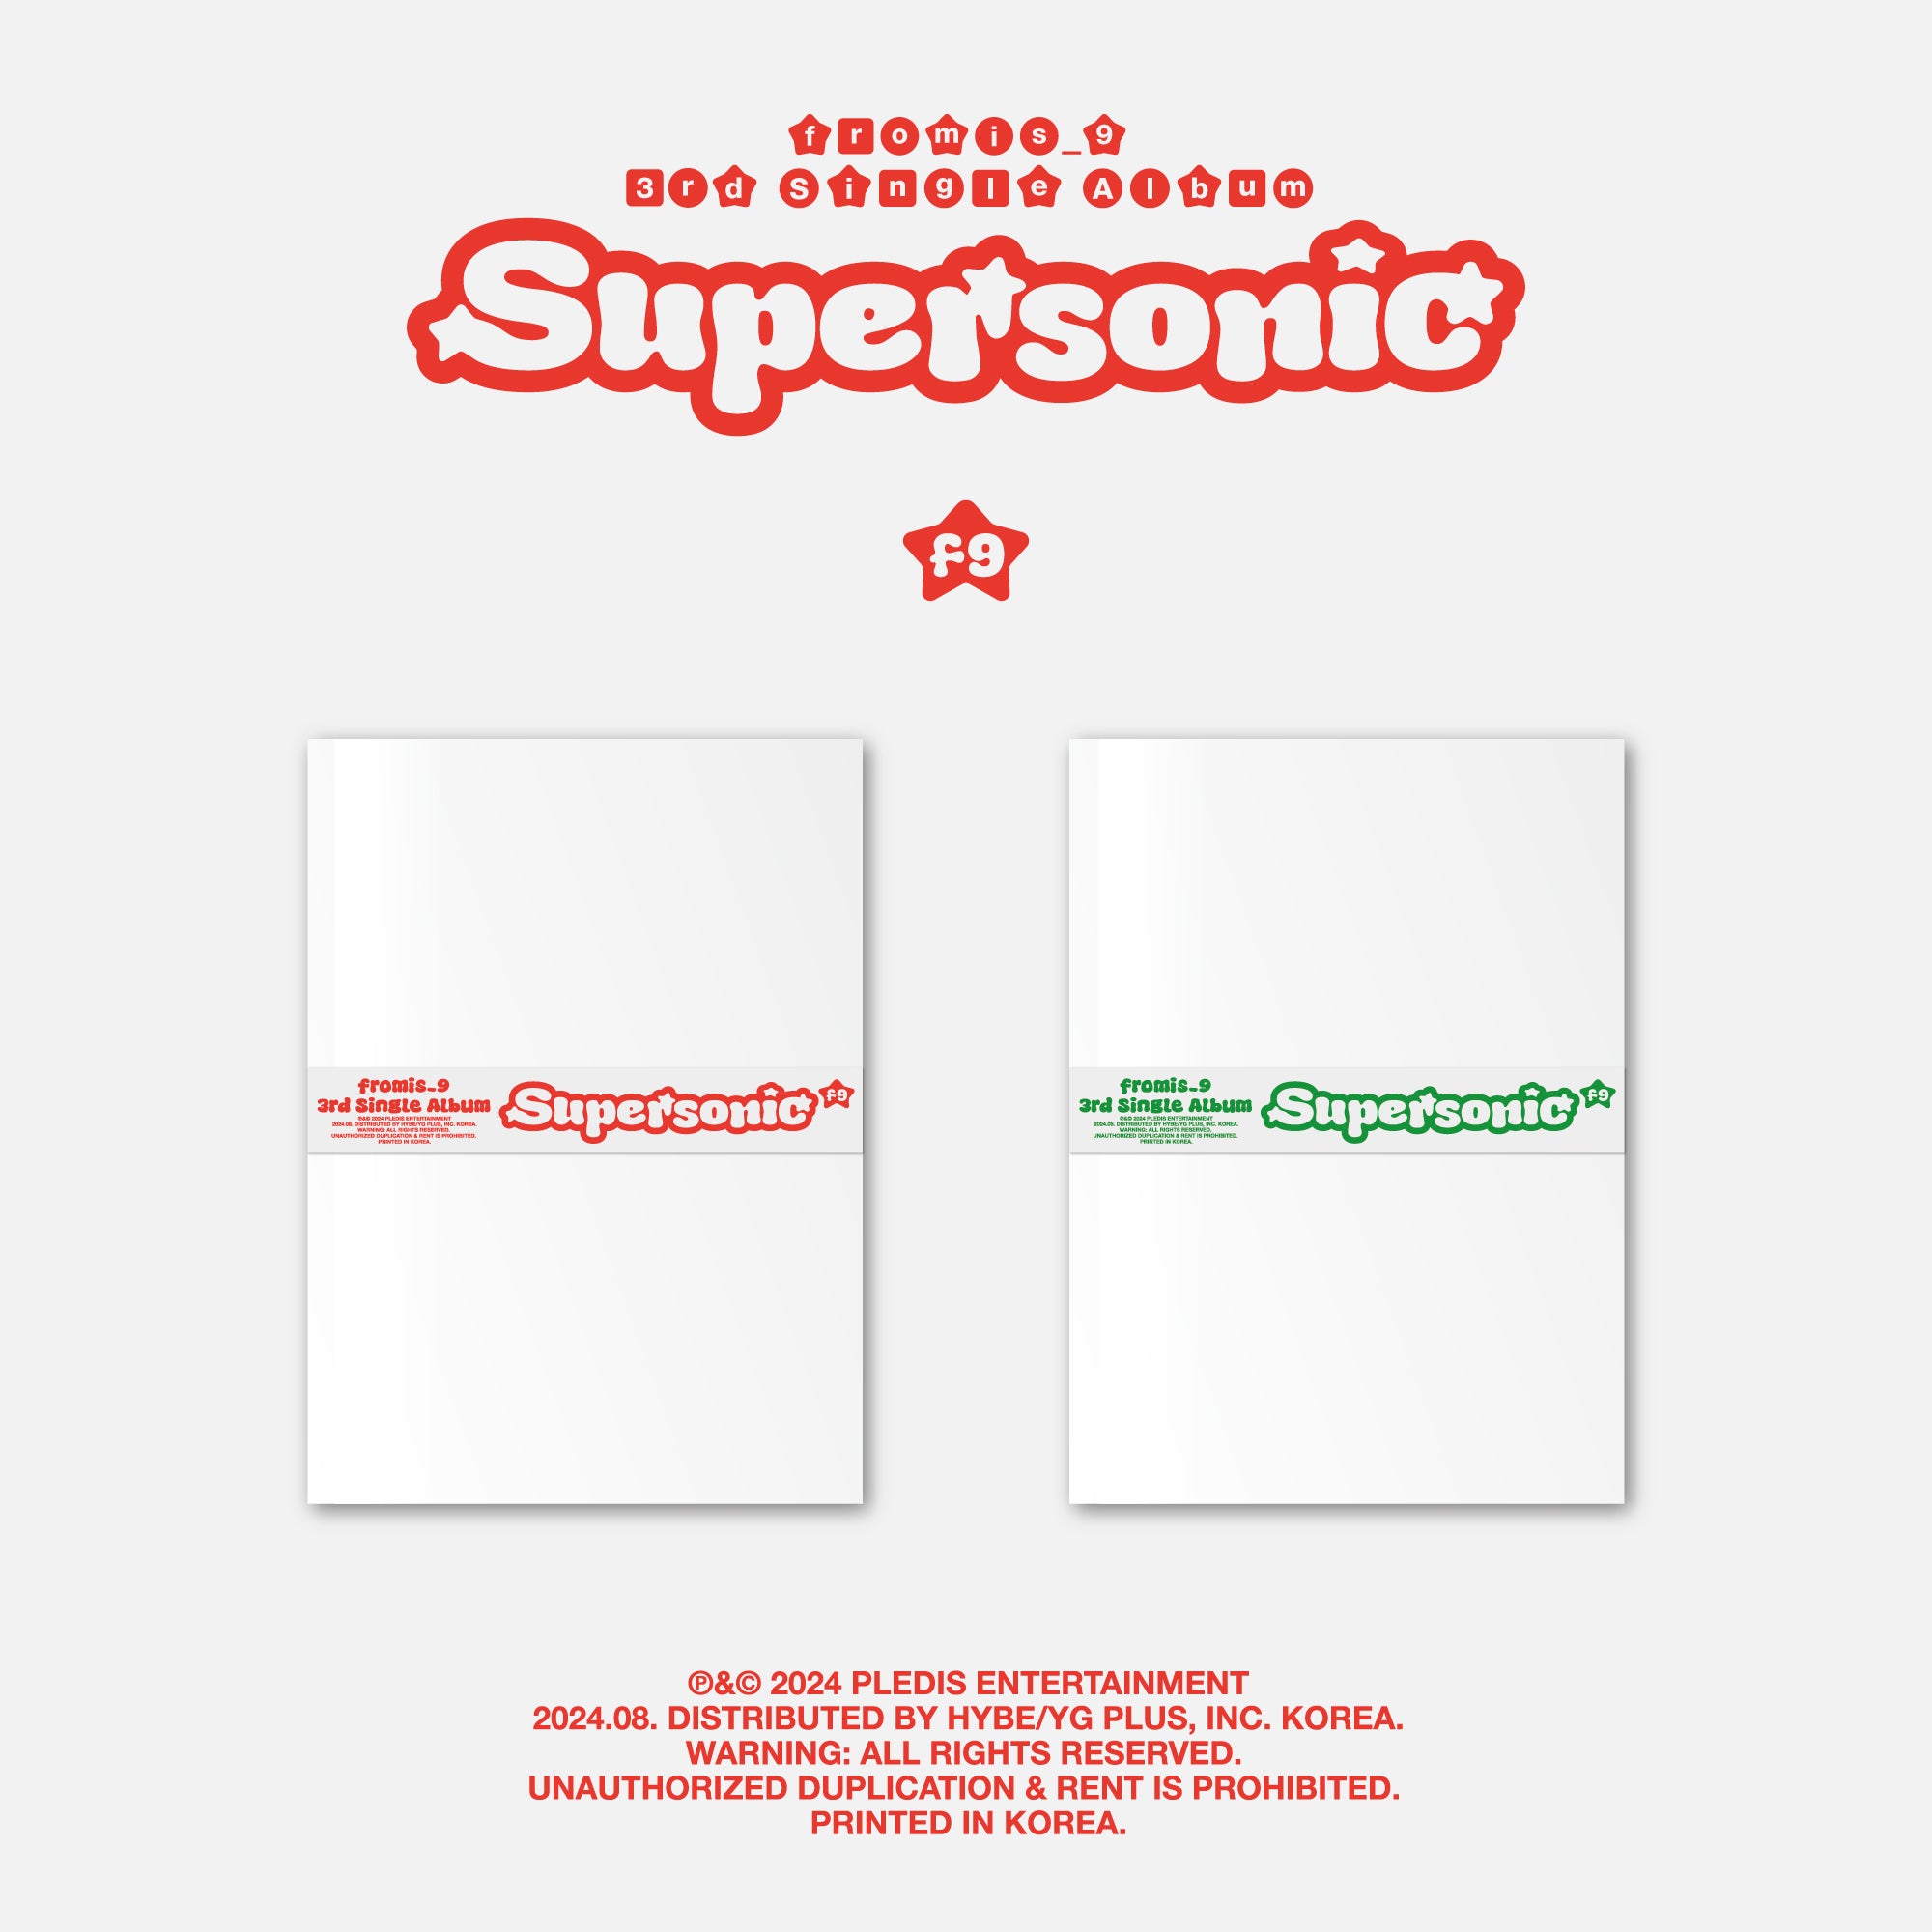 fromis_9 - 3rd Single Album [Supersonic] Standard Ver.